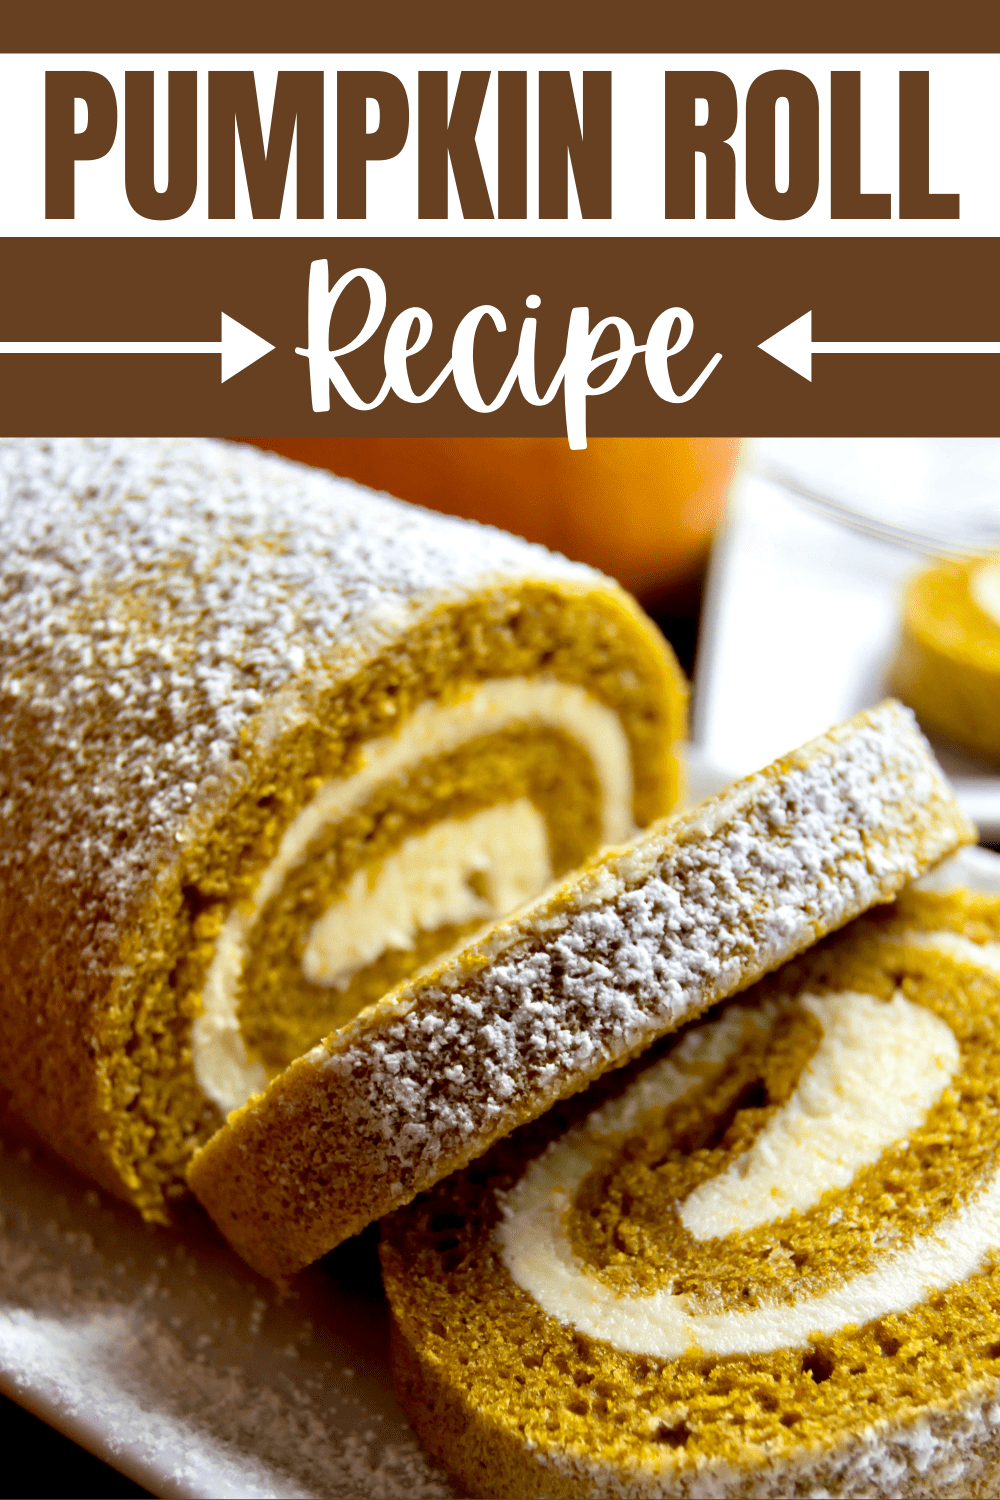 Pumpkin Roll Recipe (+ Cream Cheese Filling) - Insanely Good